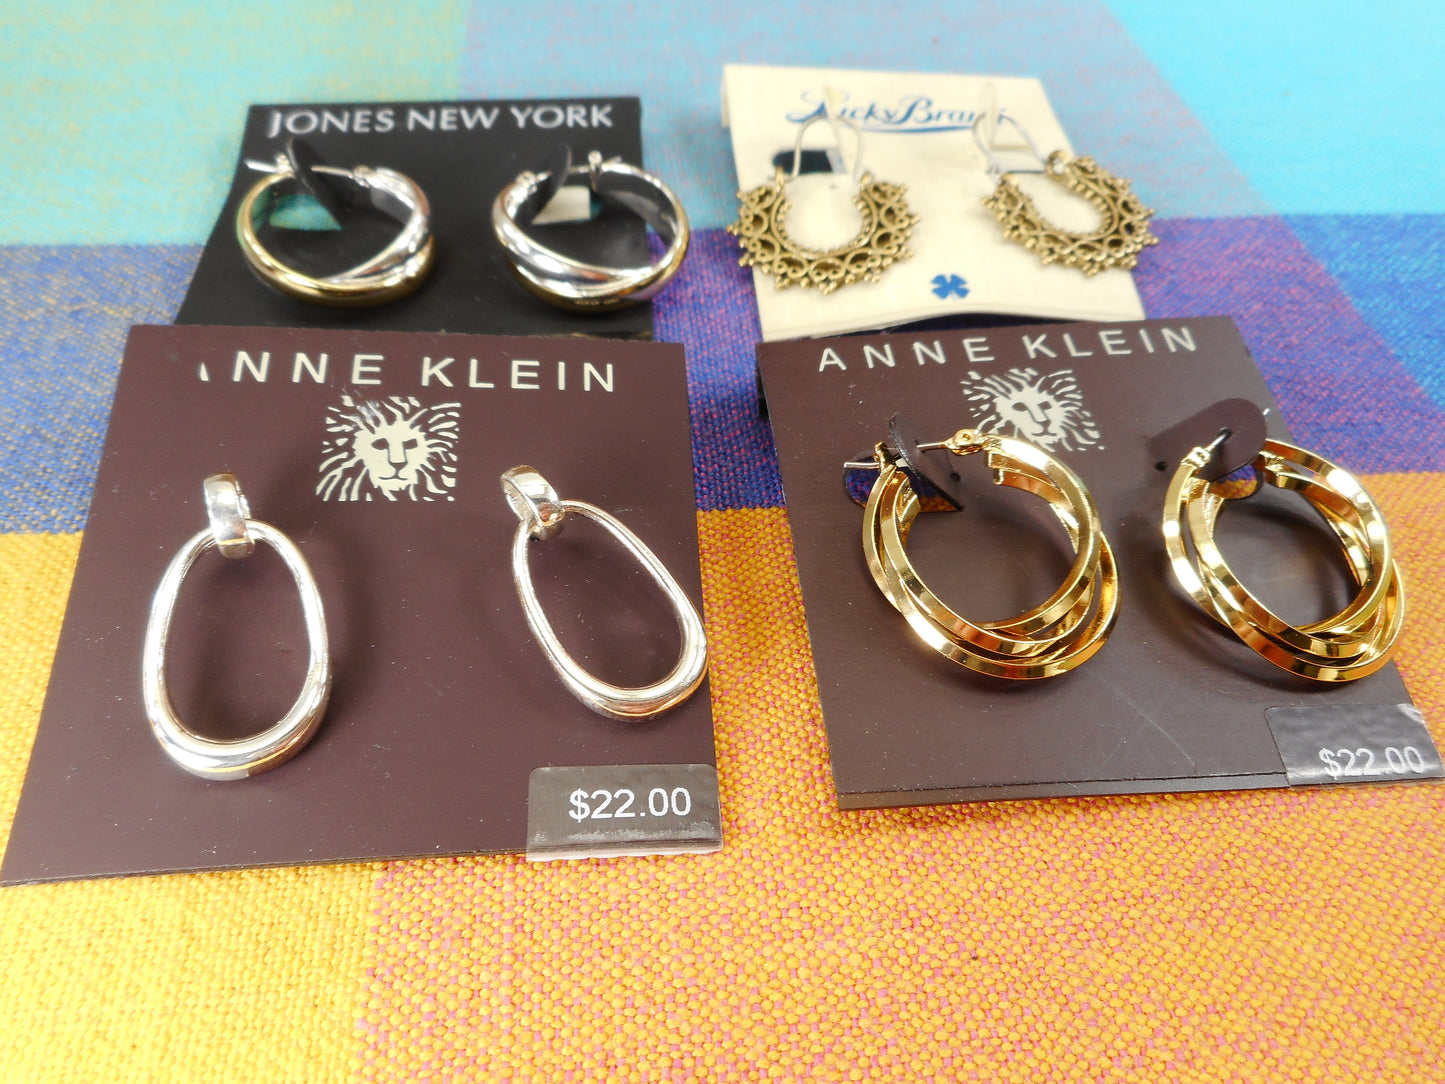 Macy's NWT 4 Lot Earrings - Anne Klein Jones NY Lucky - Gold Silver Tone New